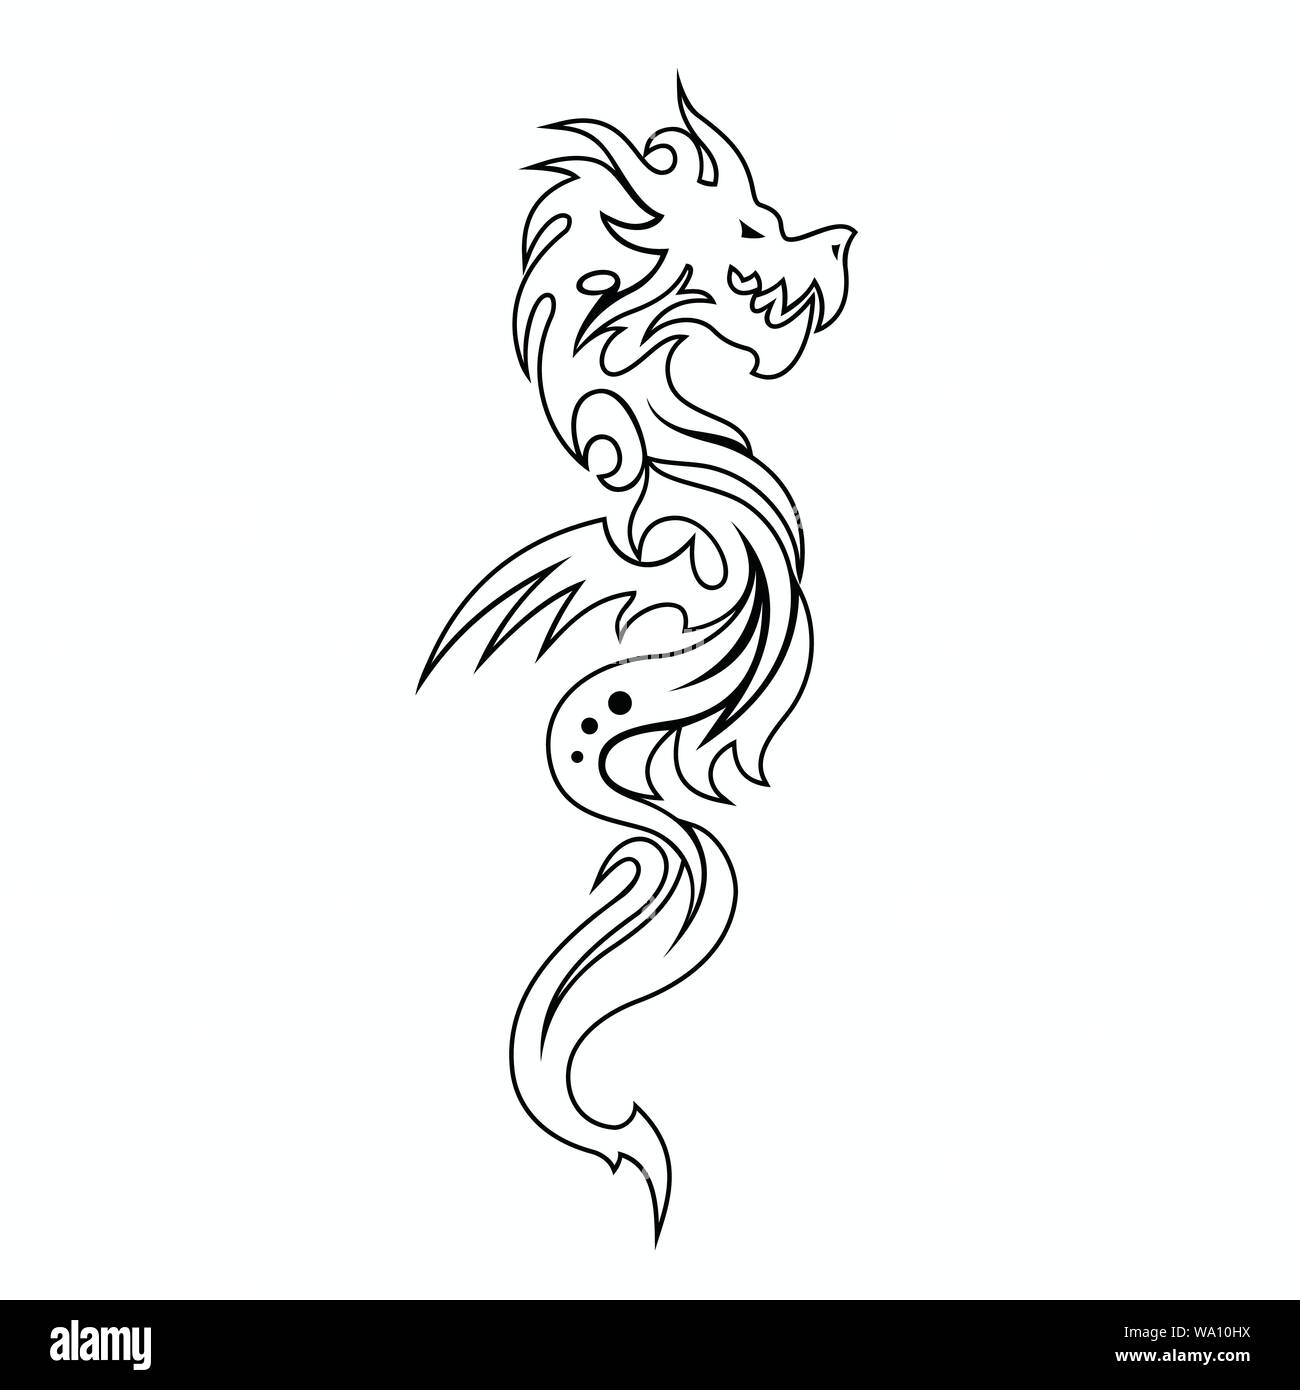 Vector illustration of dragon tattoo design Stock Vector Image ...